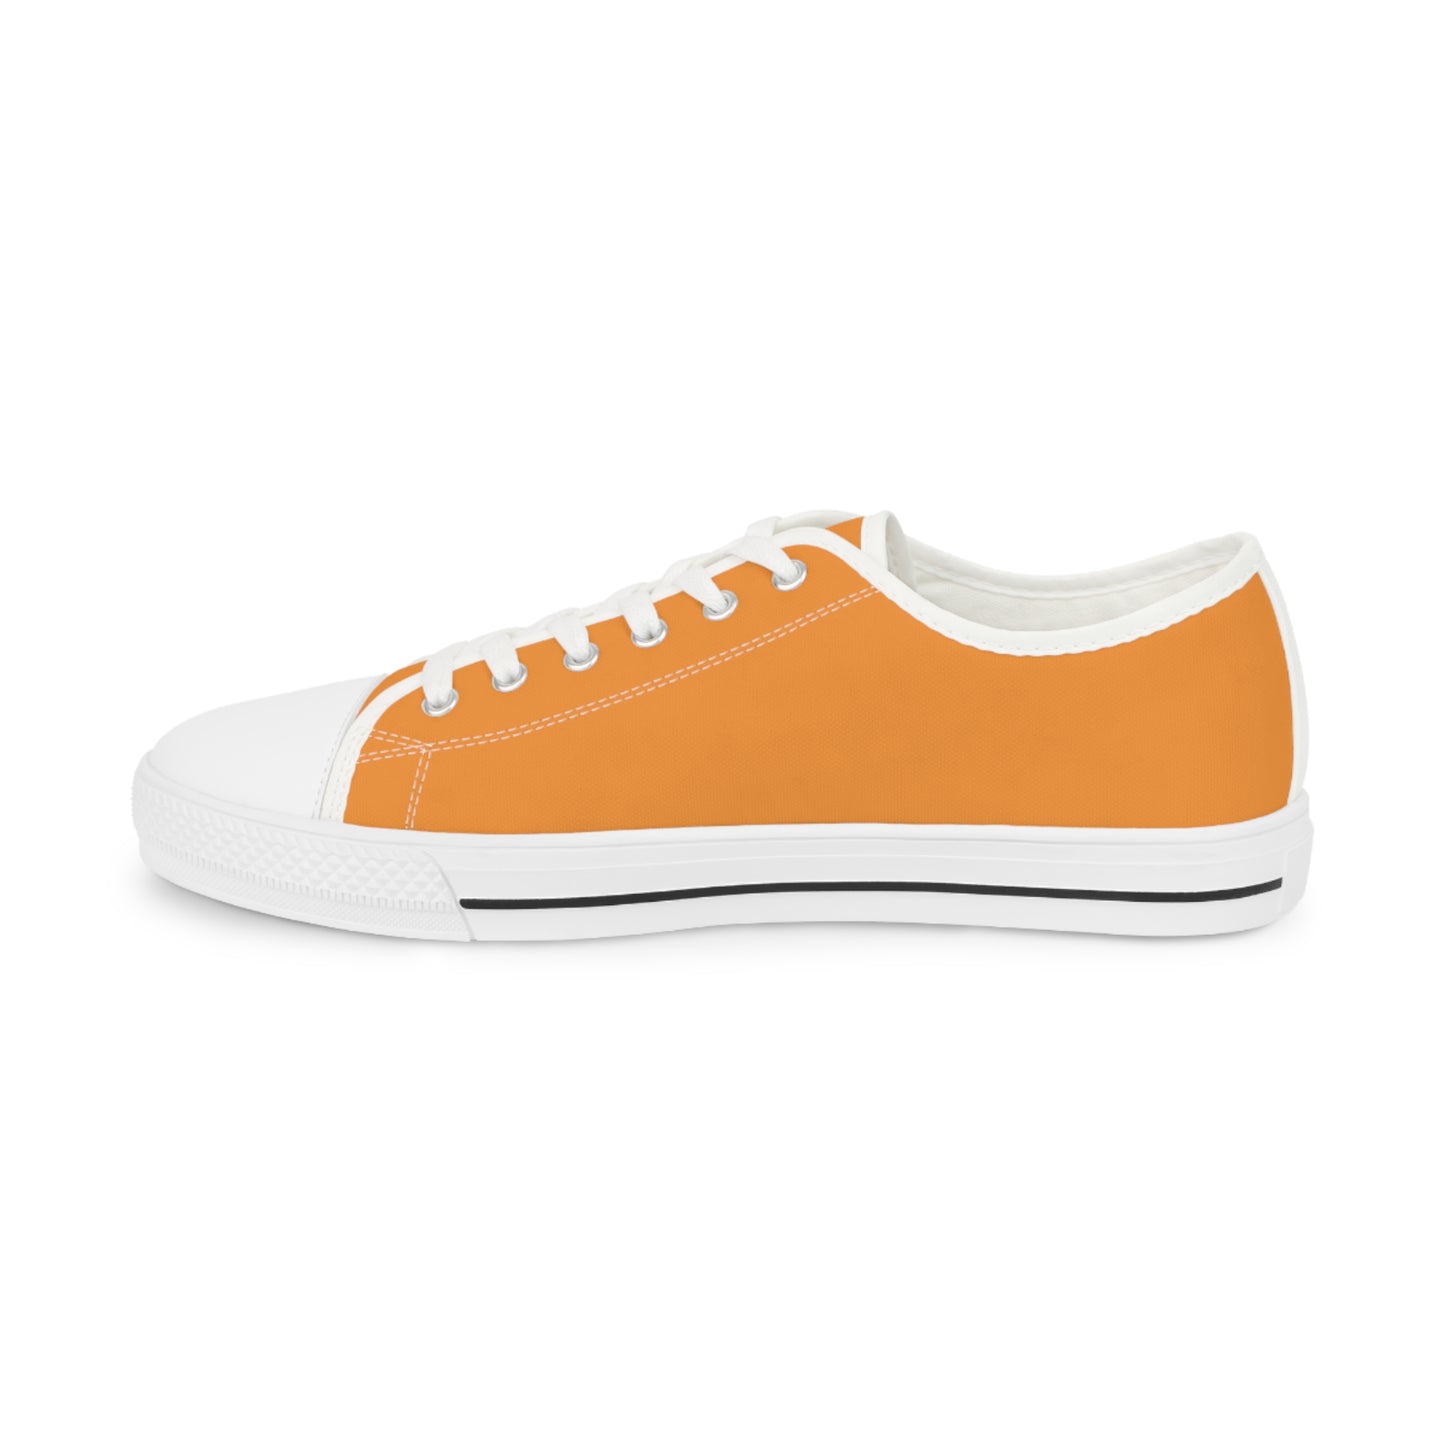 Men's Low Top Sneakers - Medium Orange US 14 Black sole